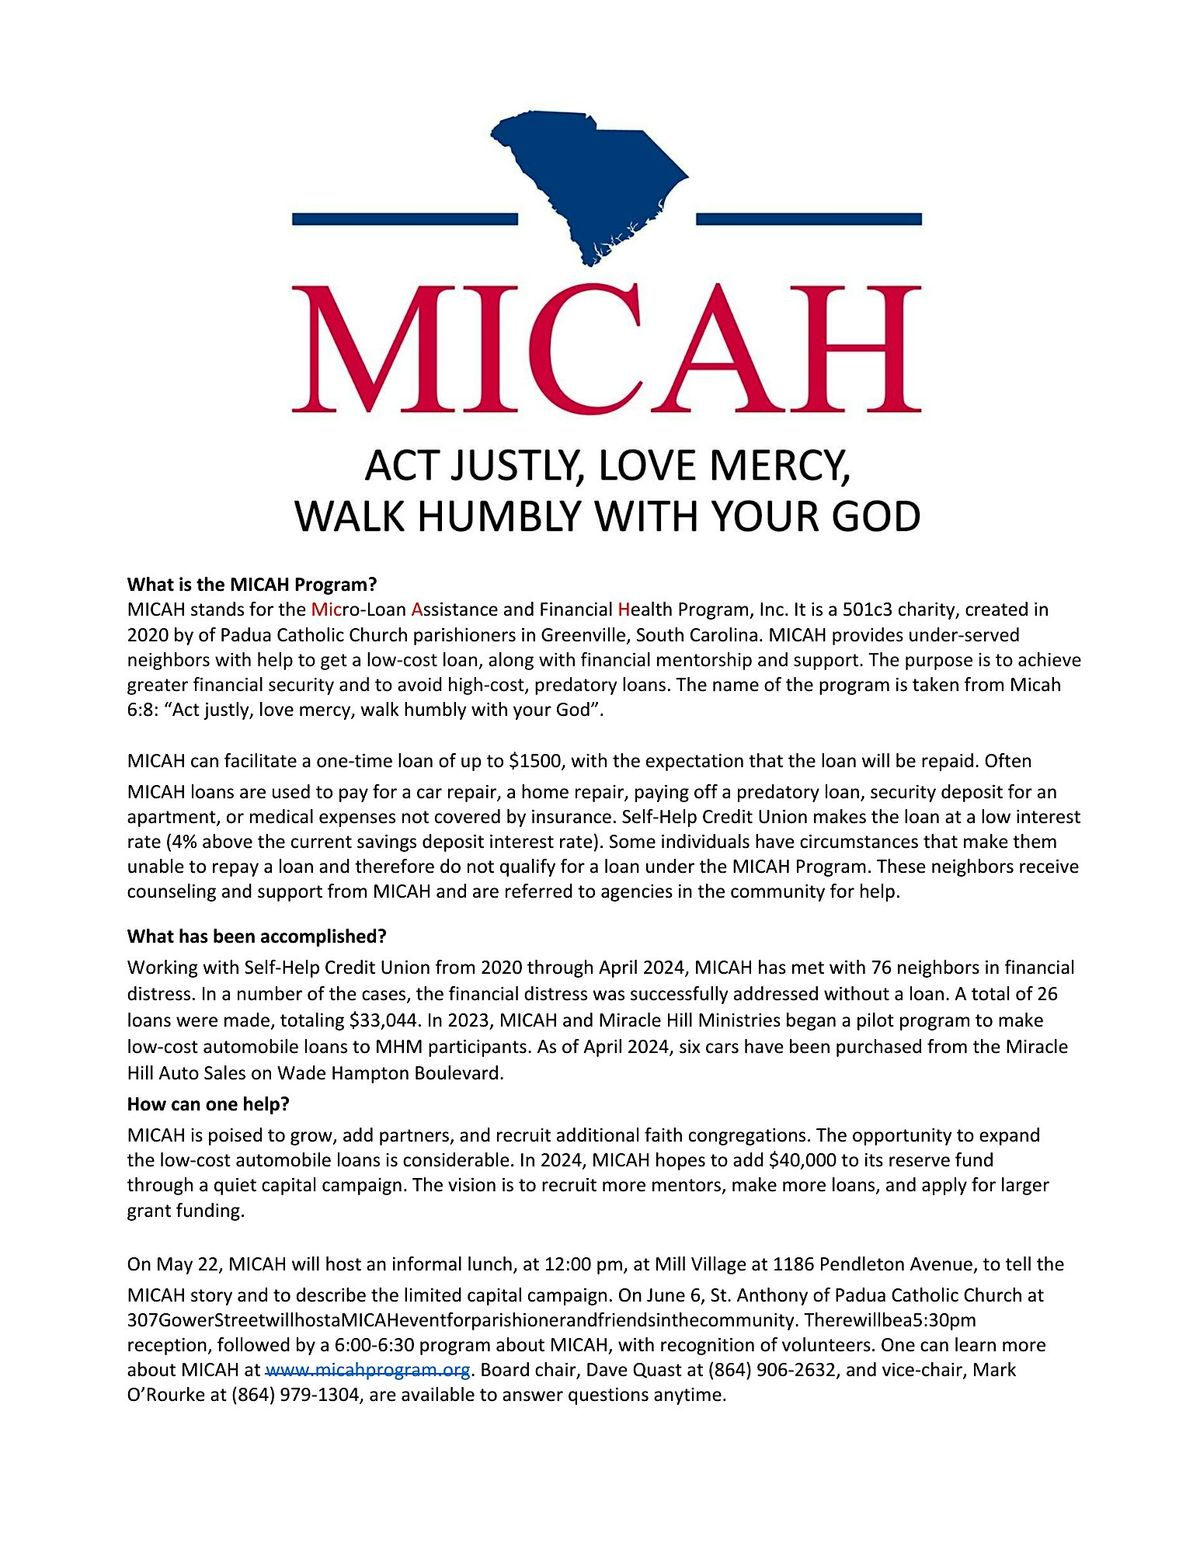 Understanding and Expanding the MICAH Program